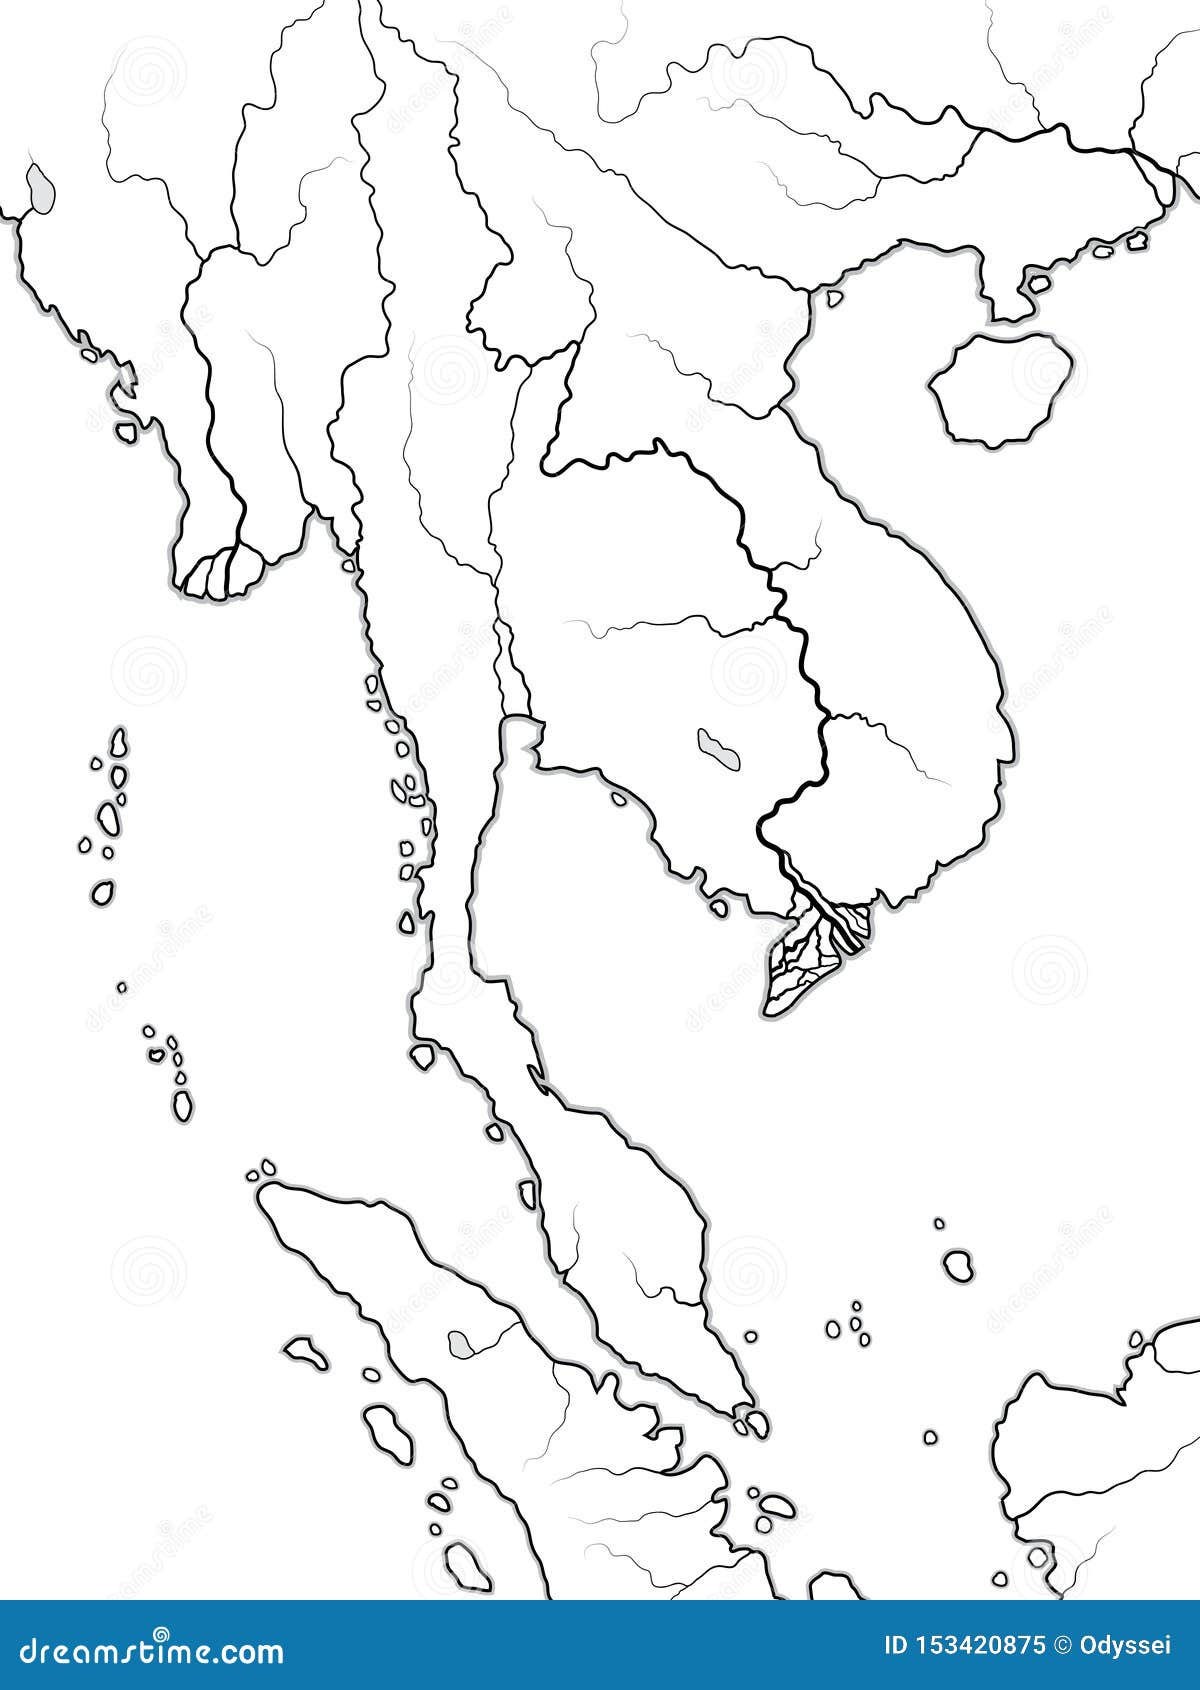 world map of indochina: indochinese peninsula, thailand, vietnam, laos, malaysia, cambodja. geographic chart.